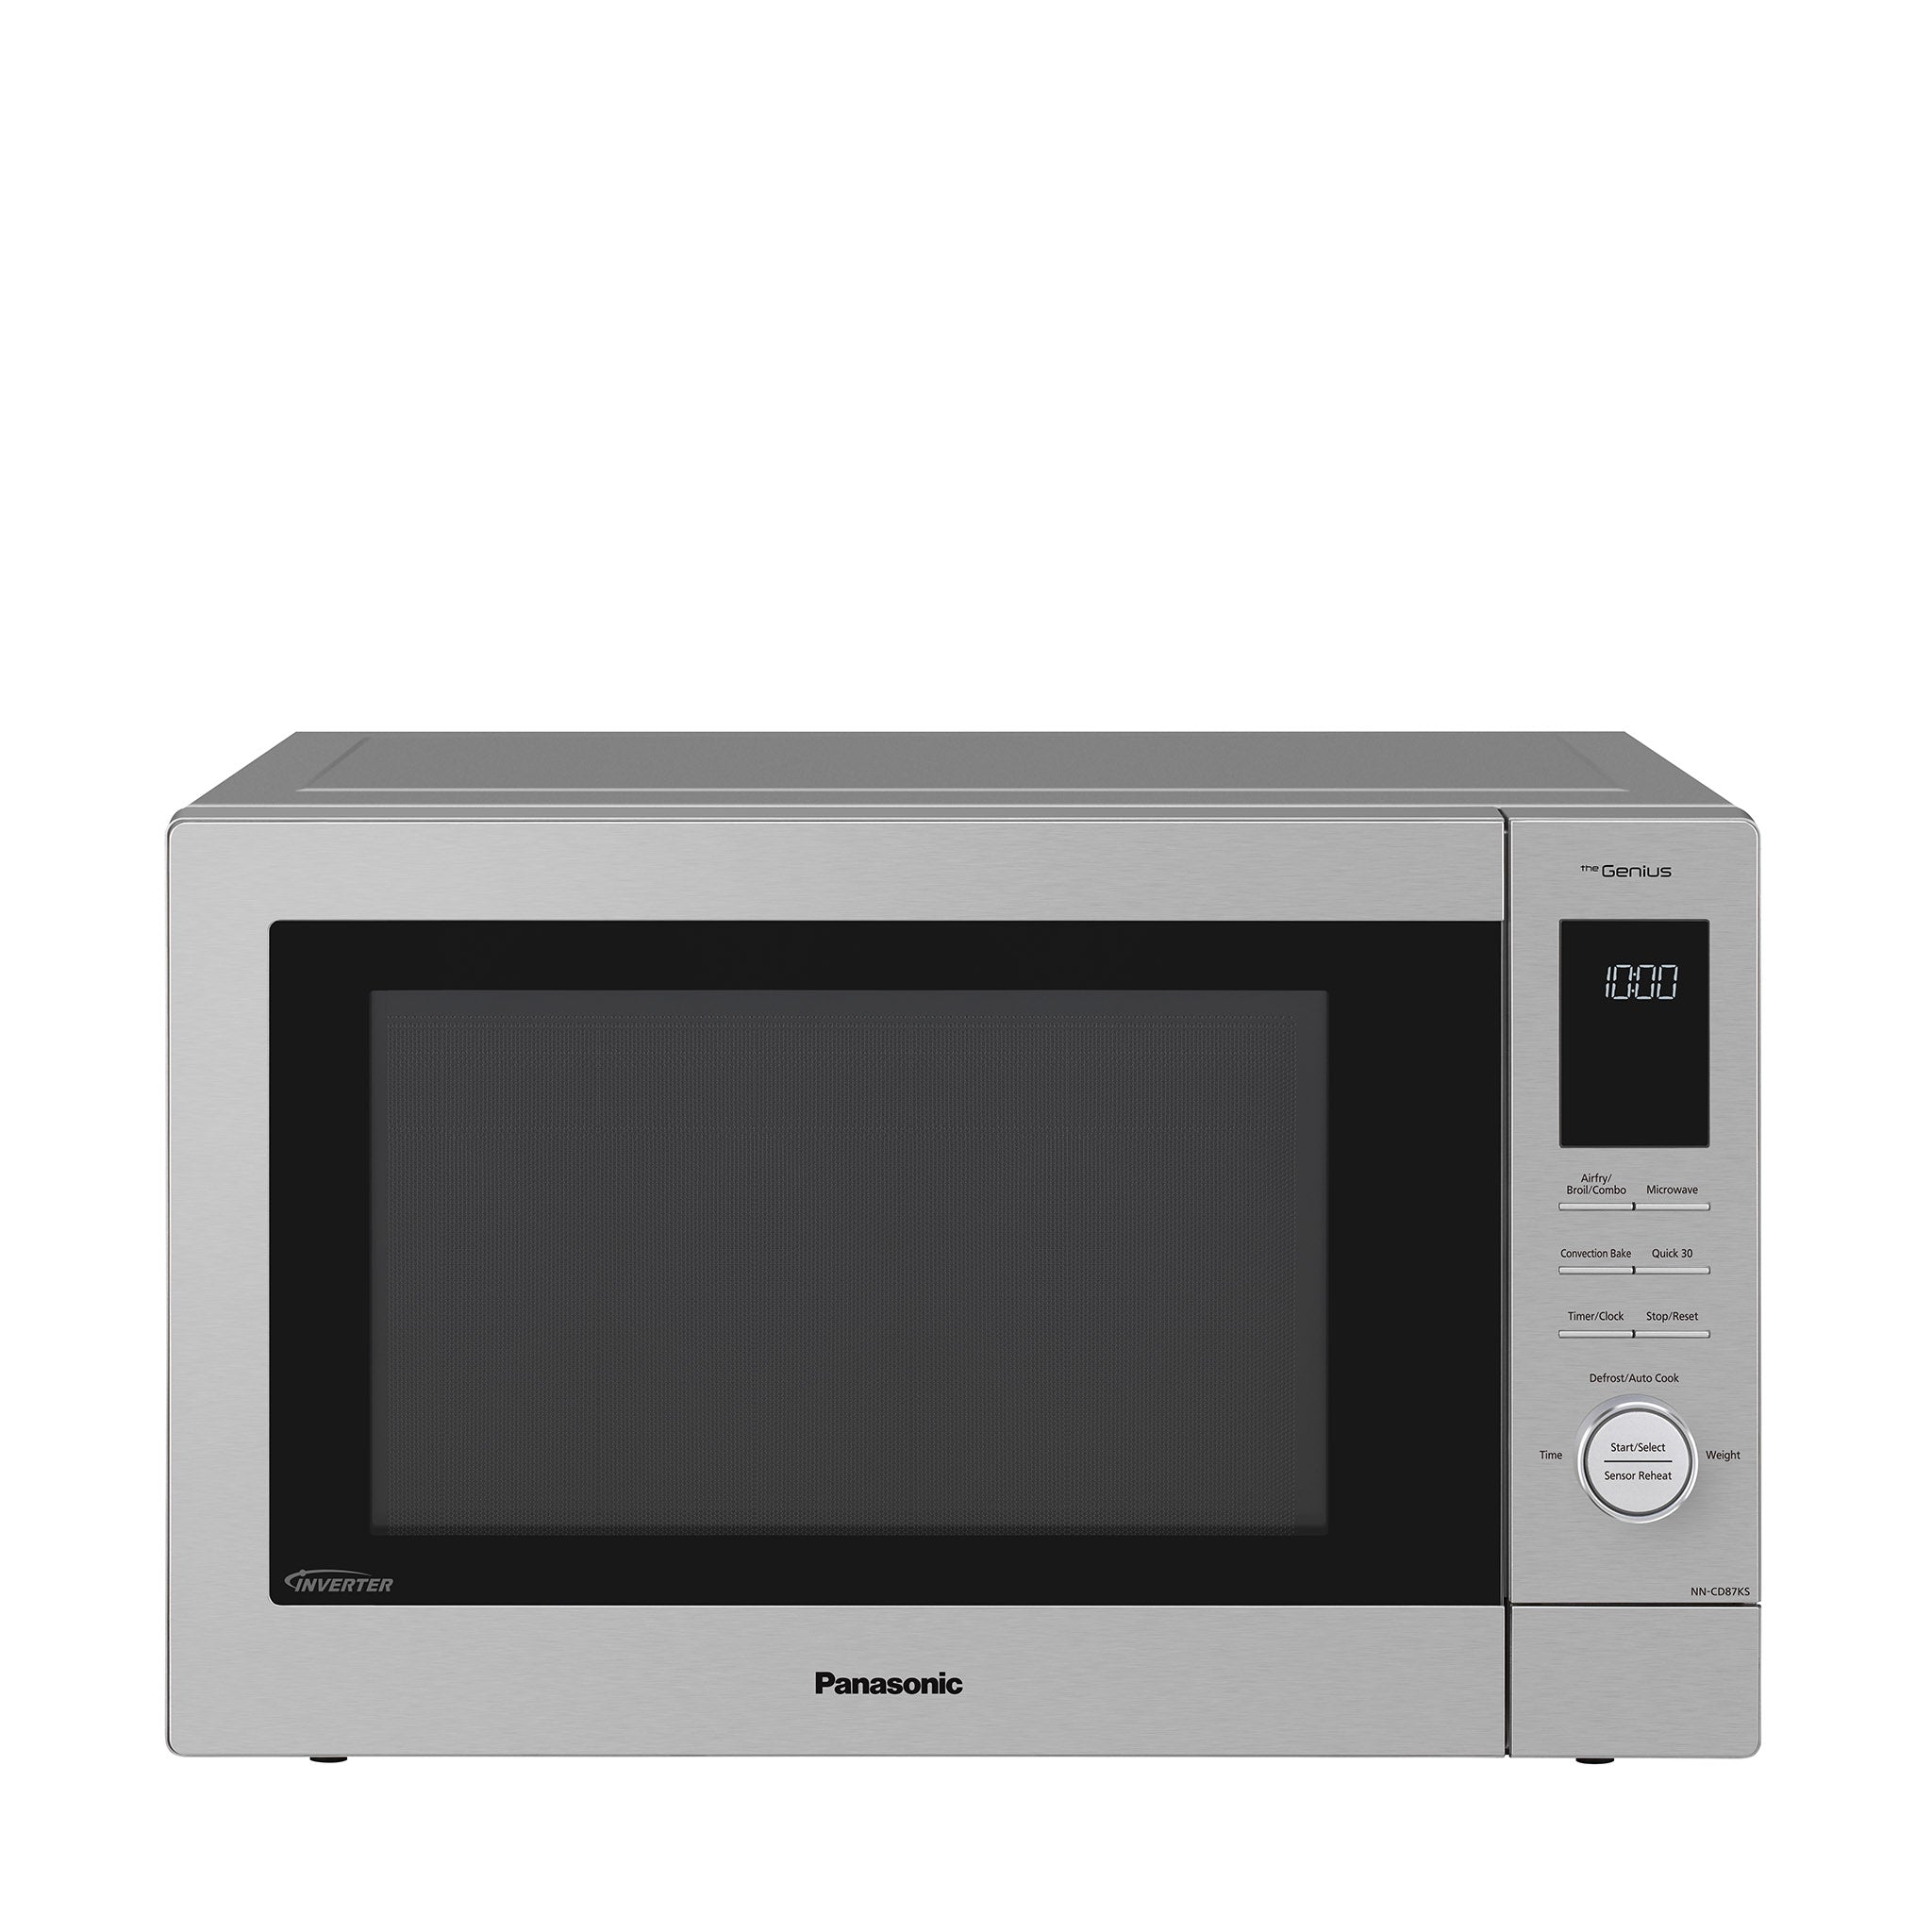 Panasonic Kitchen Appliances